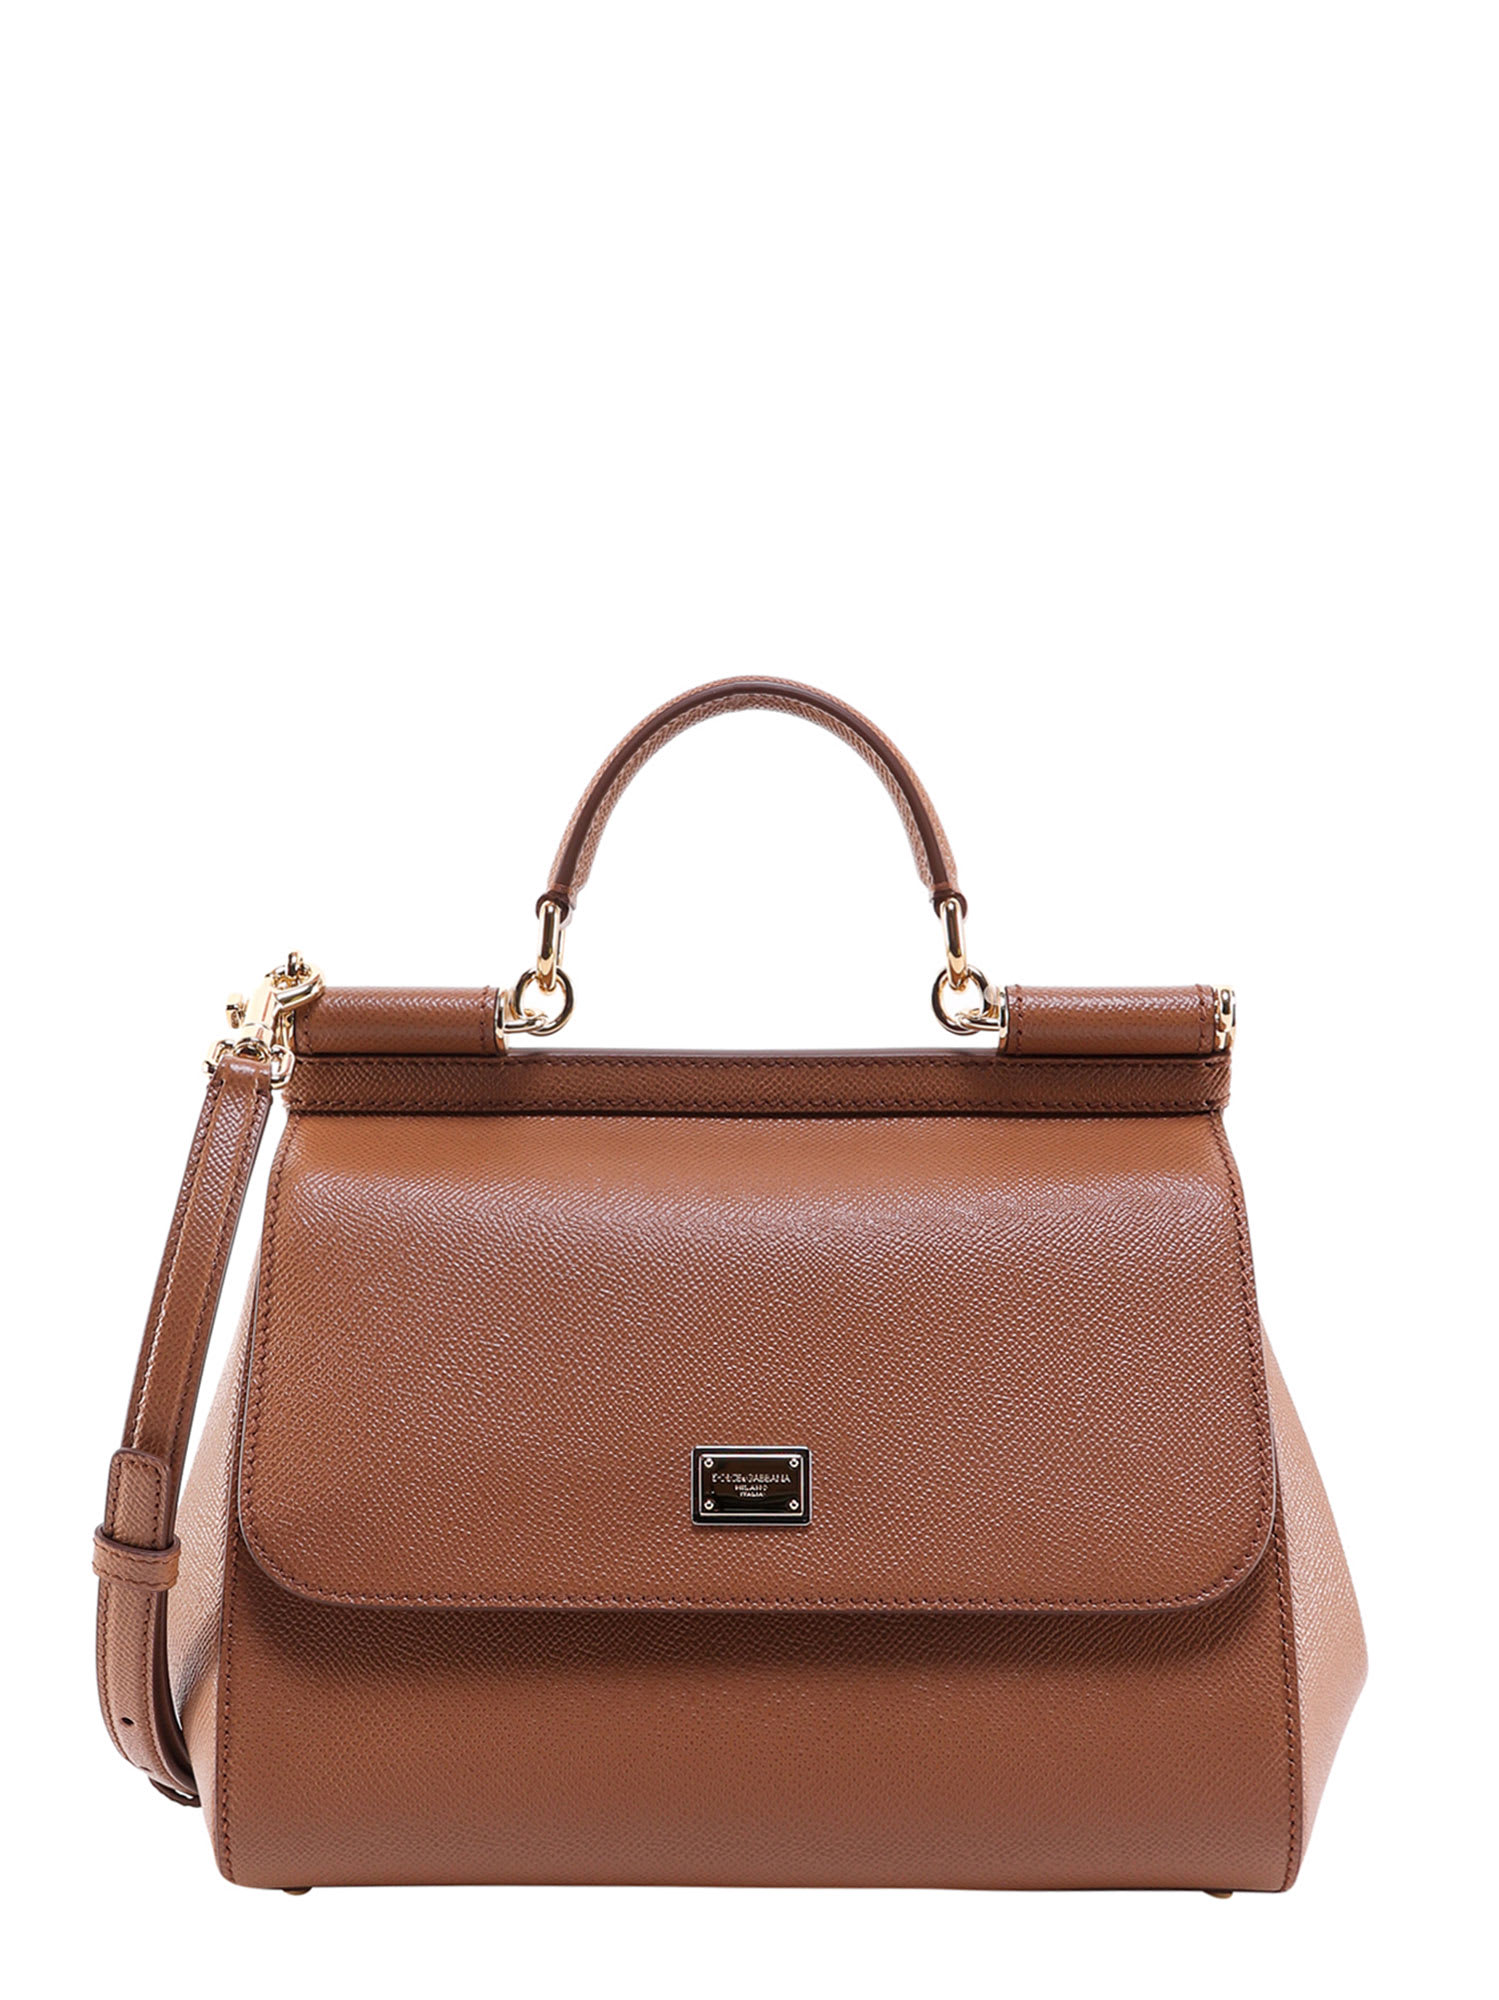 Dolce & Gabbana Sicily Handbag In Brown